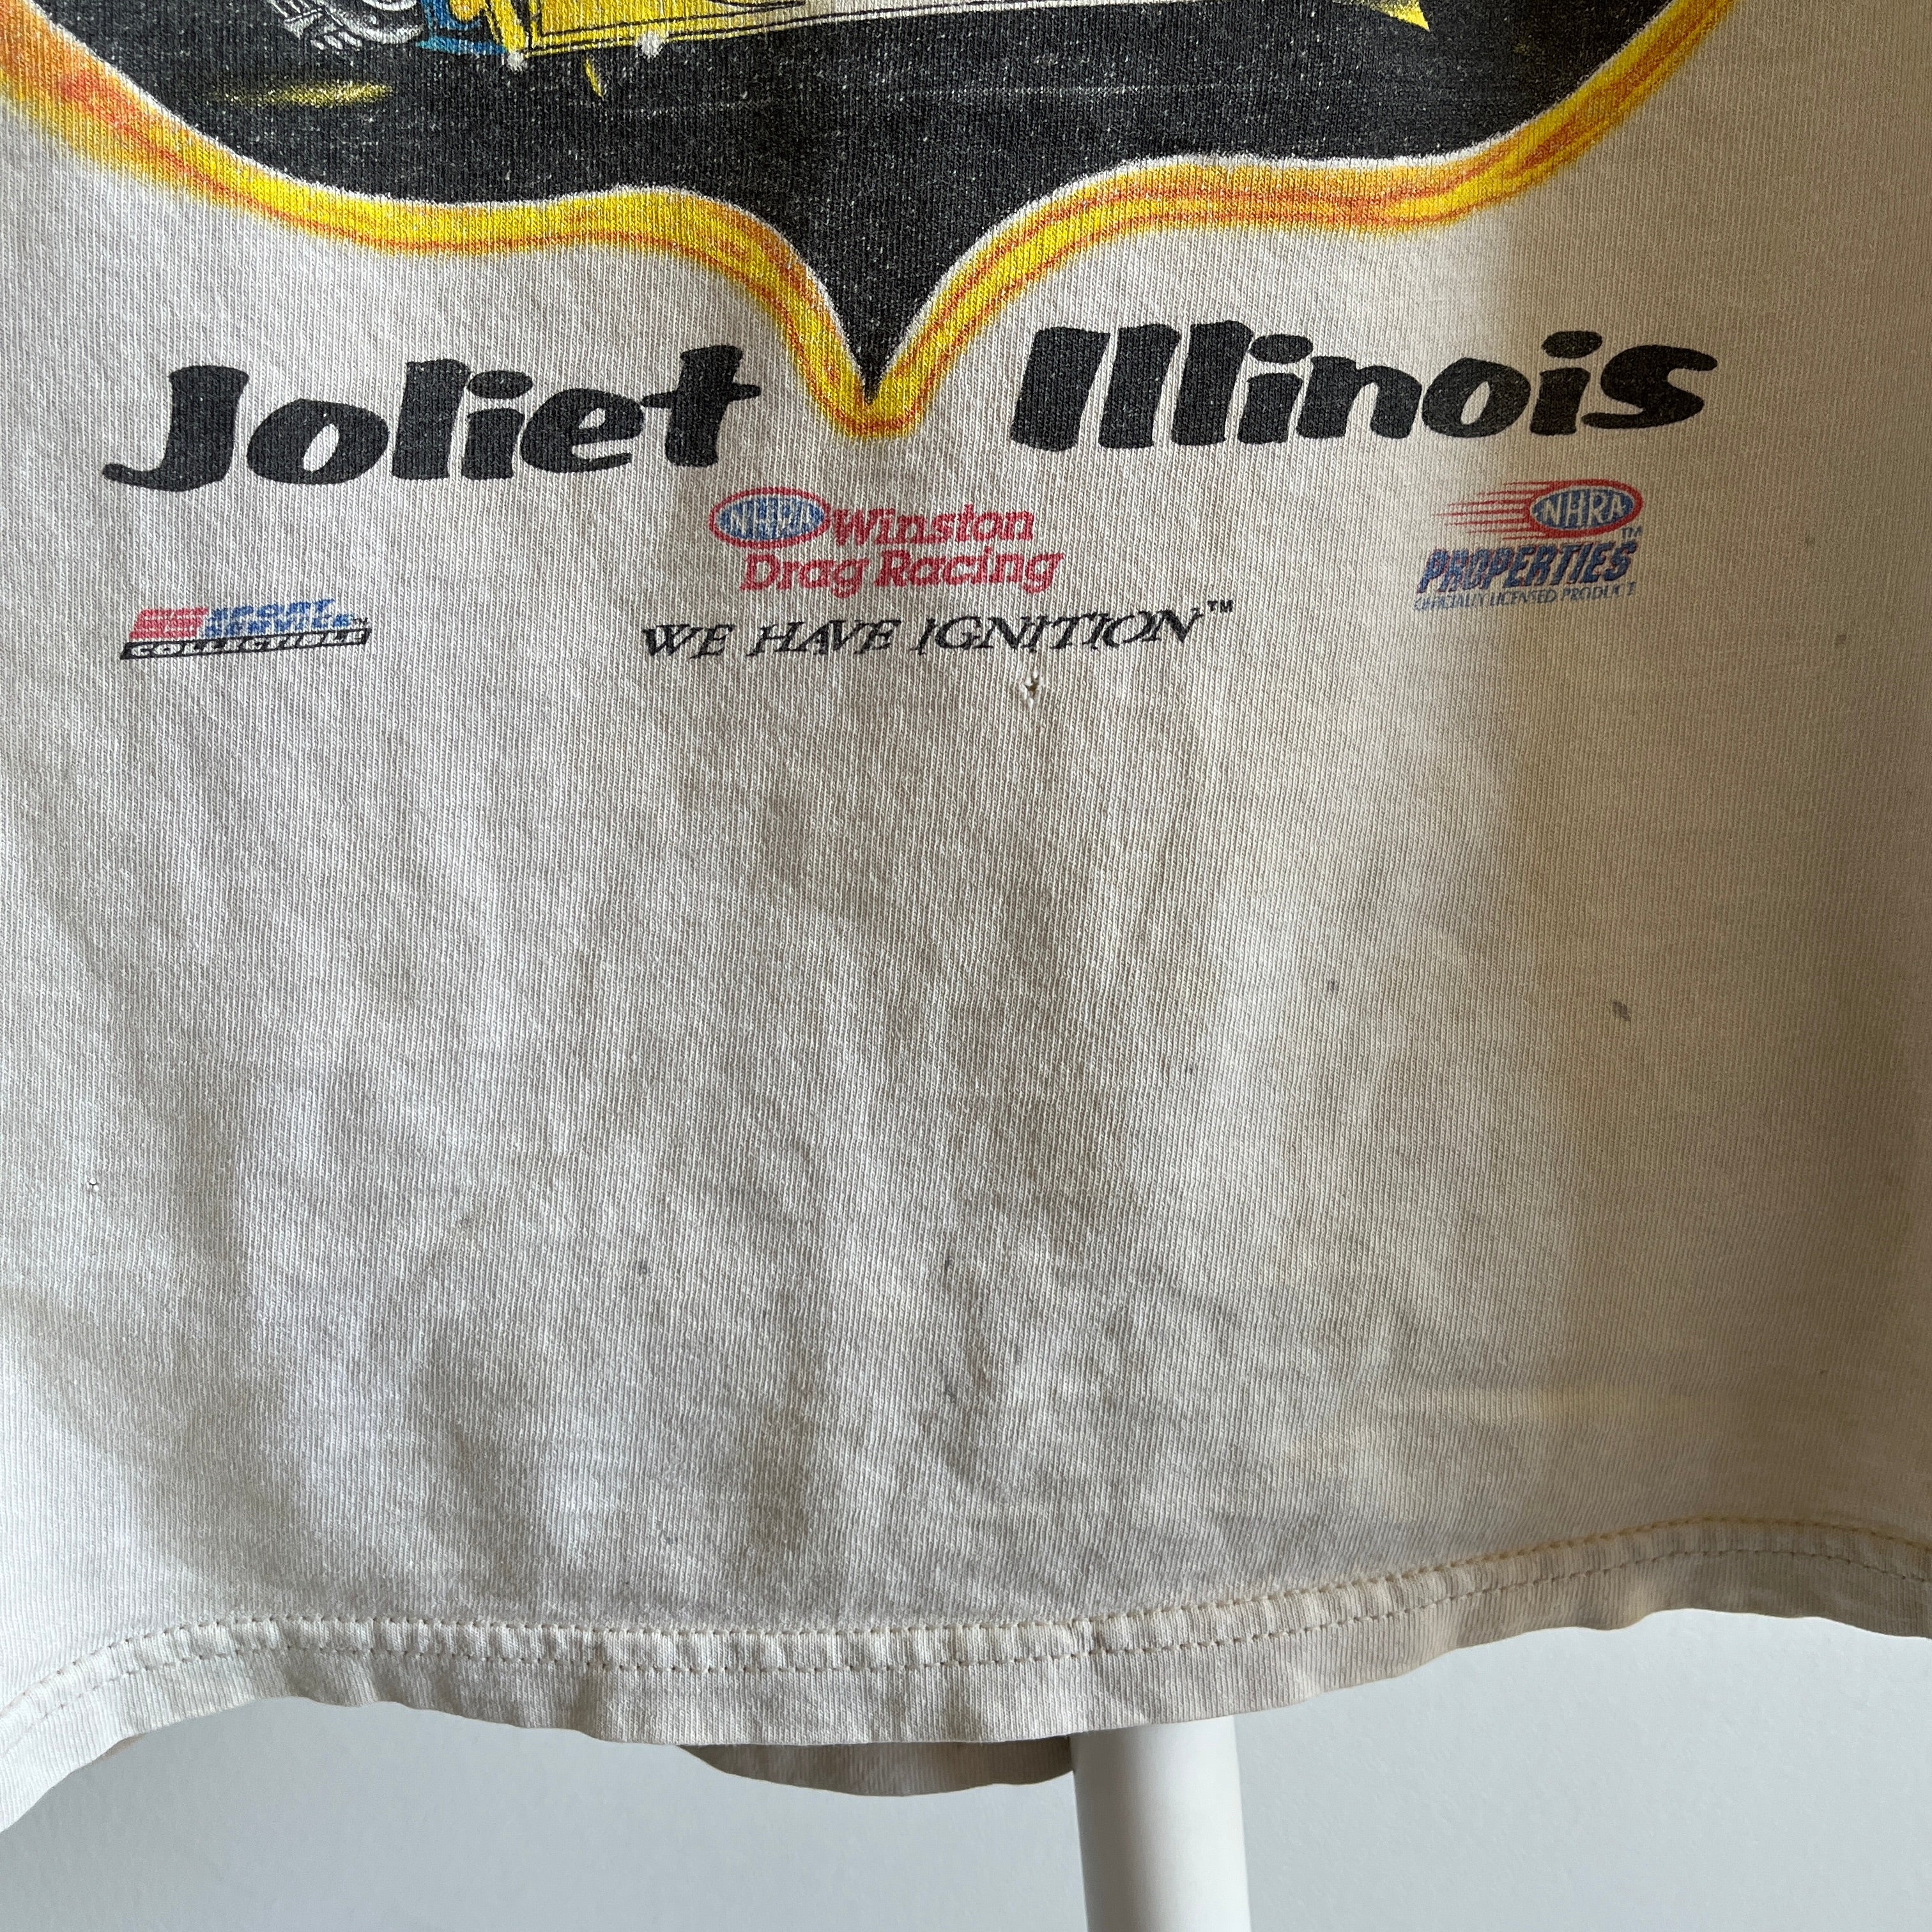 2000 Race Car T-Shirt Tattered and Torn T-Shirt